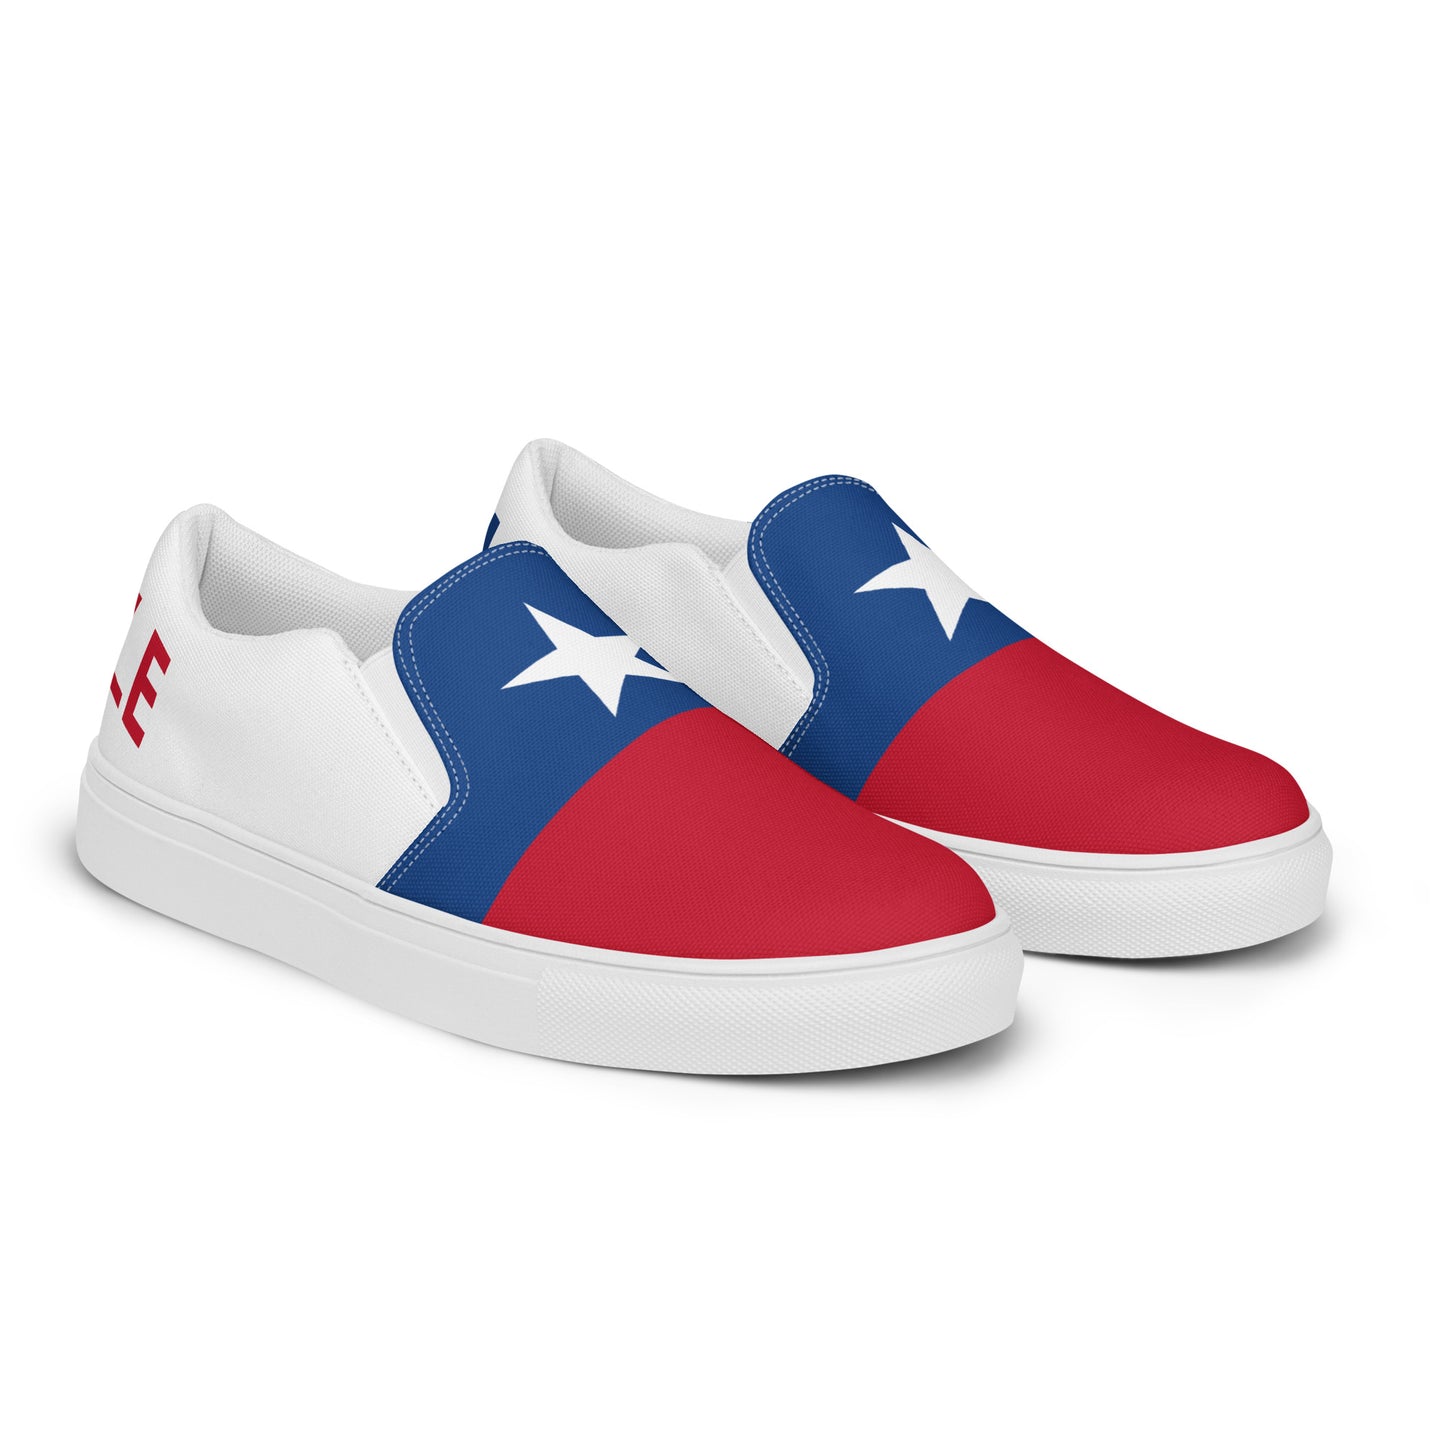 Chile - Men - Bandera - Slip-on shoes